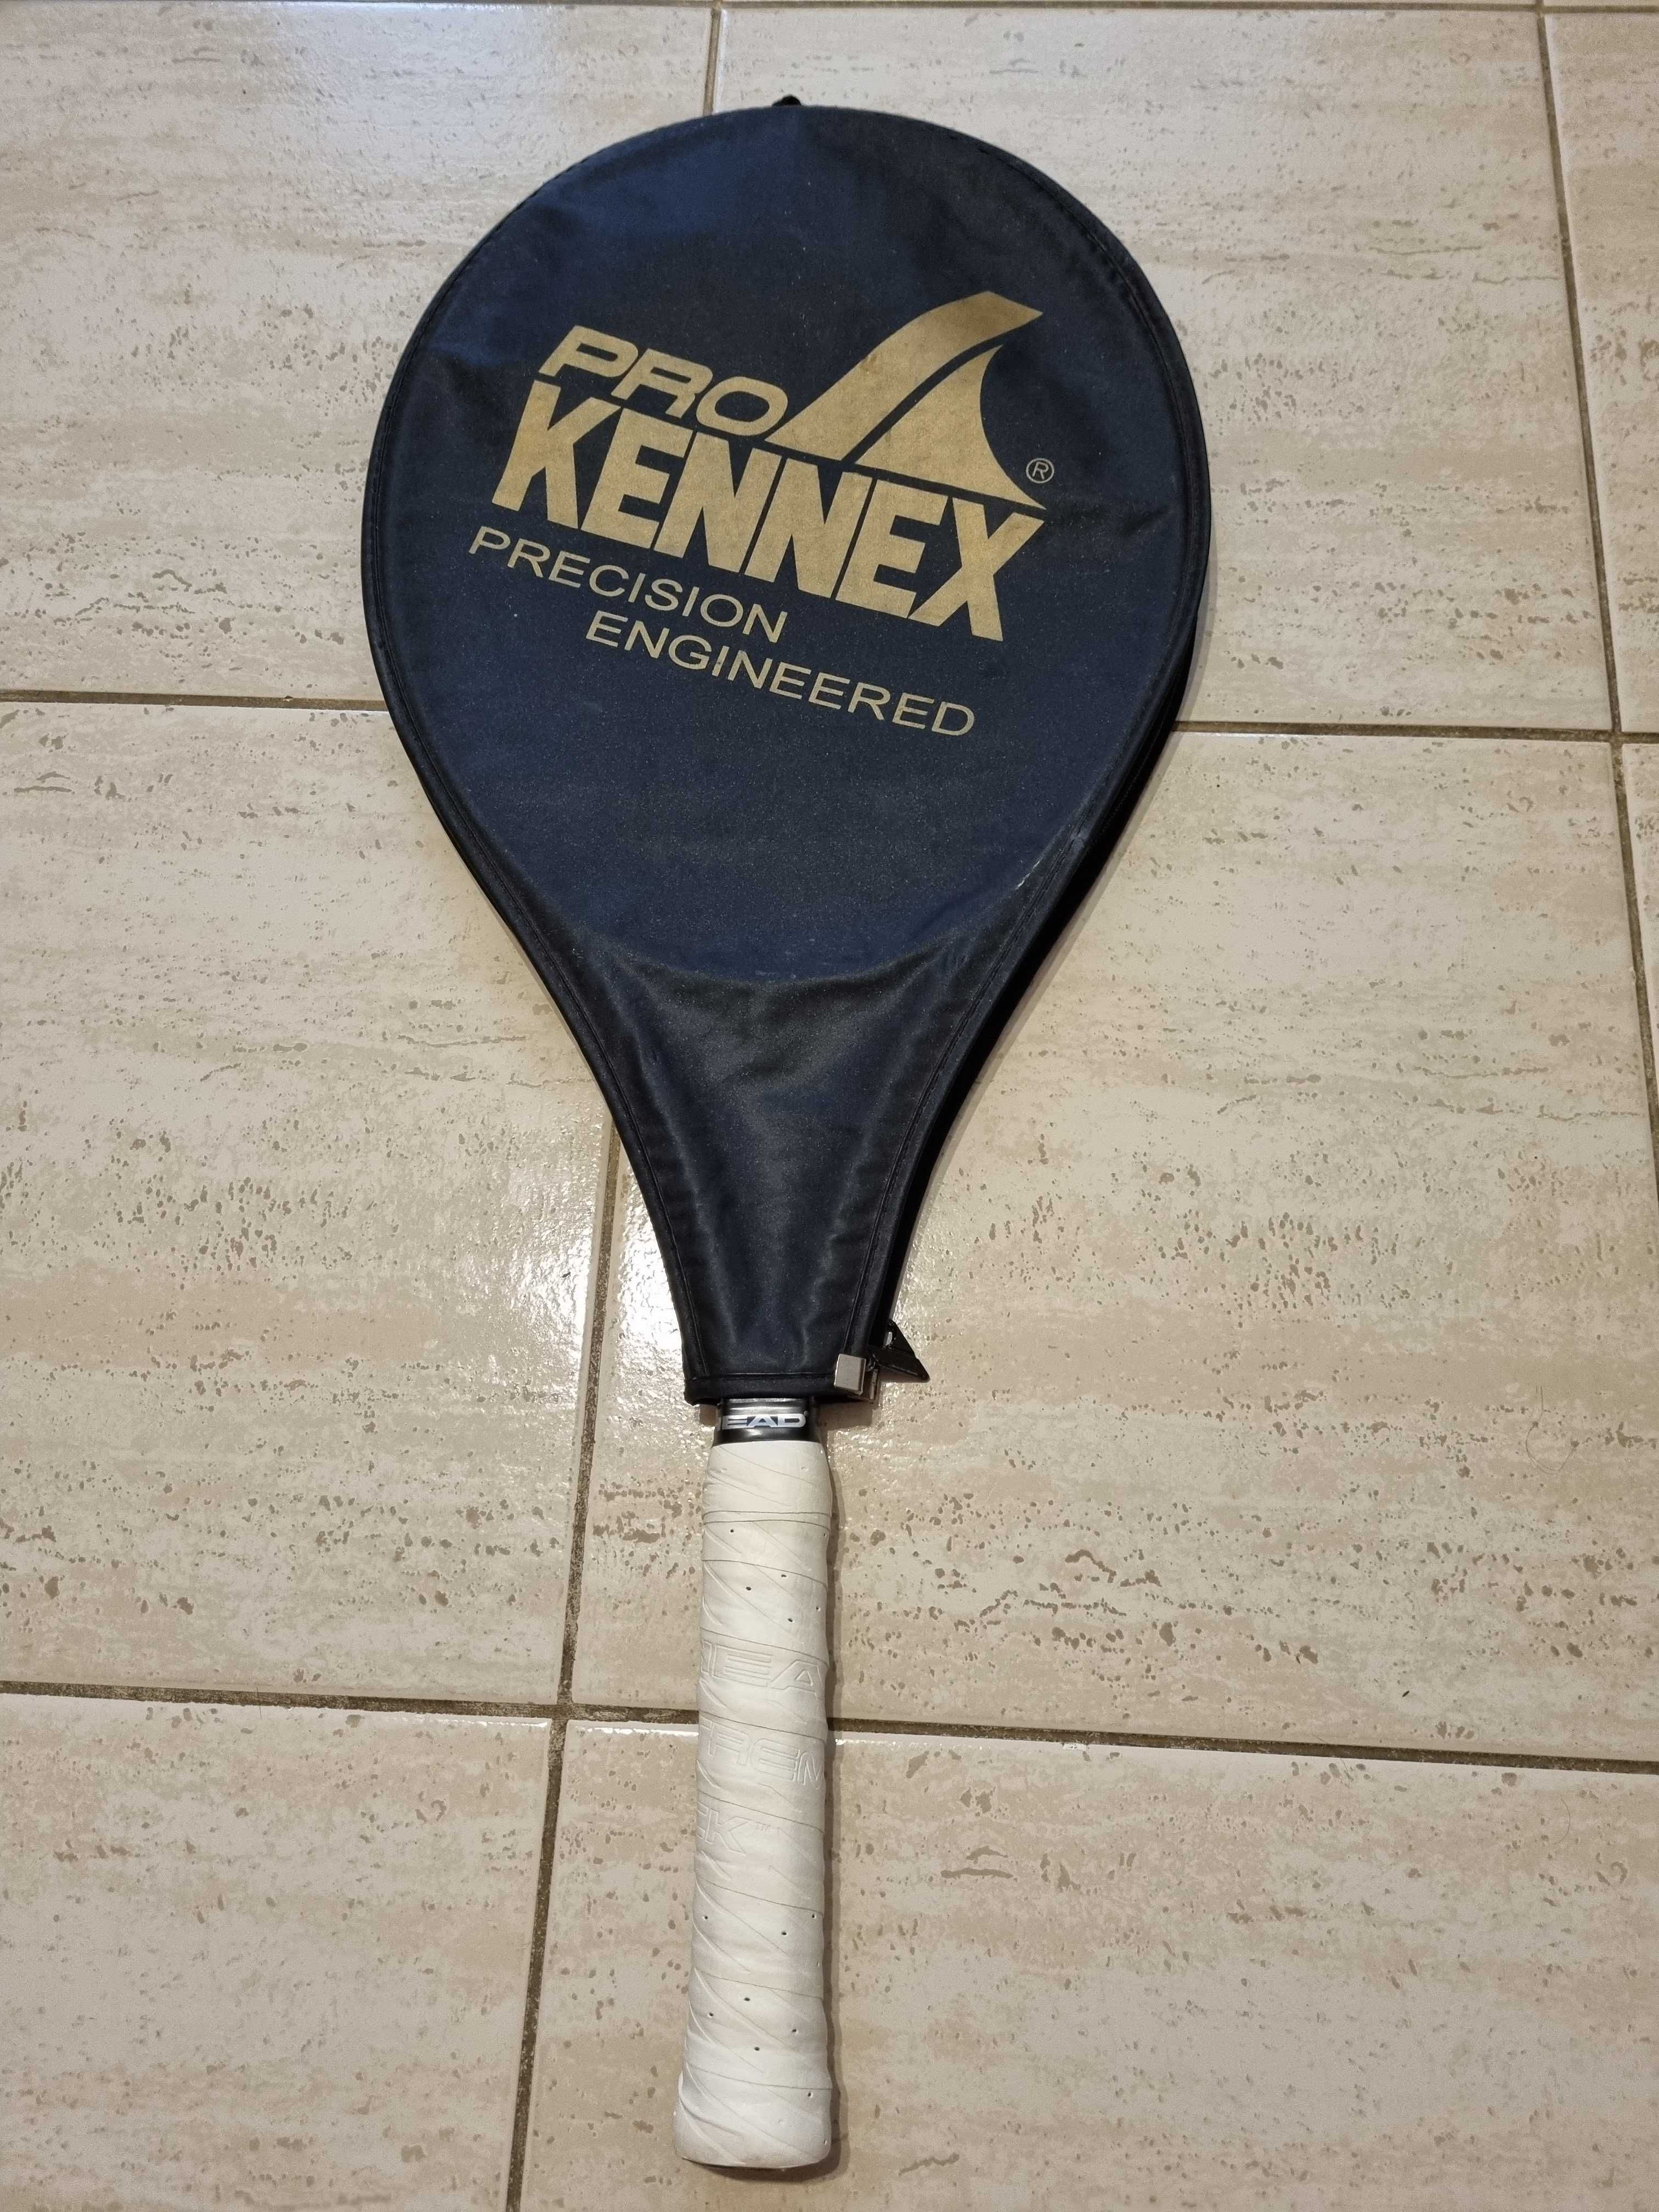 Racheta de tenis Pro Kennex 300 gr. (1 bucata)